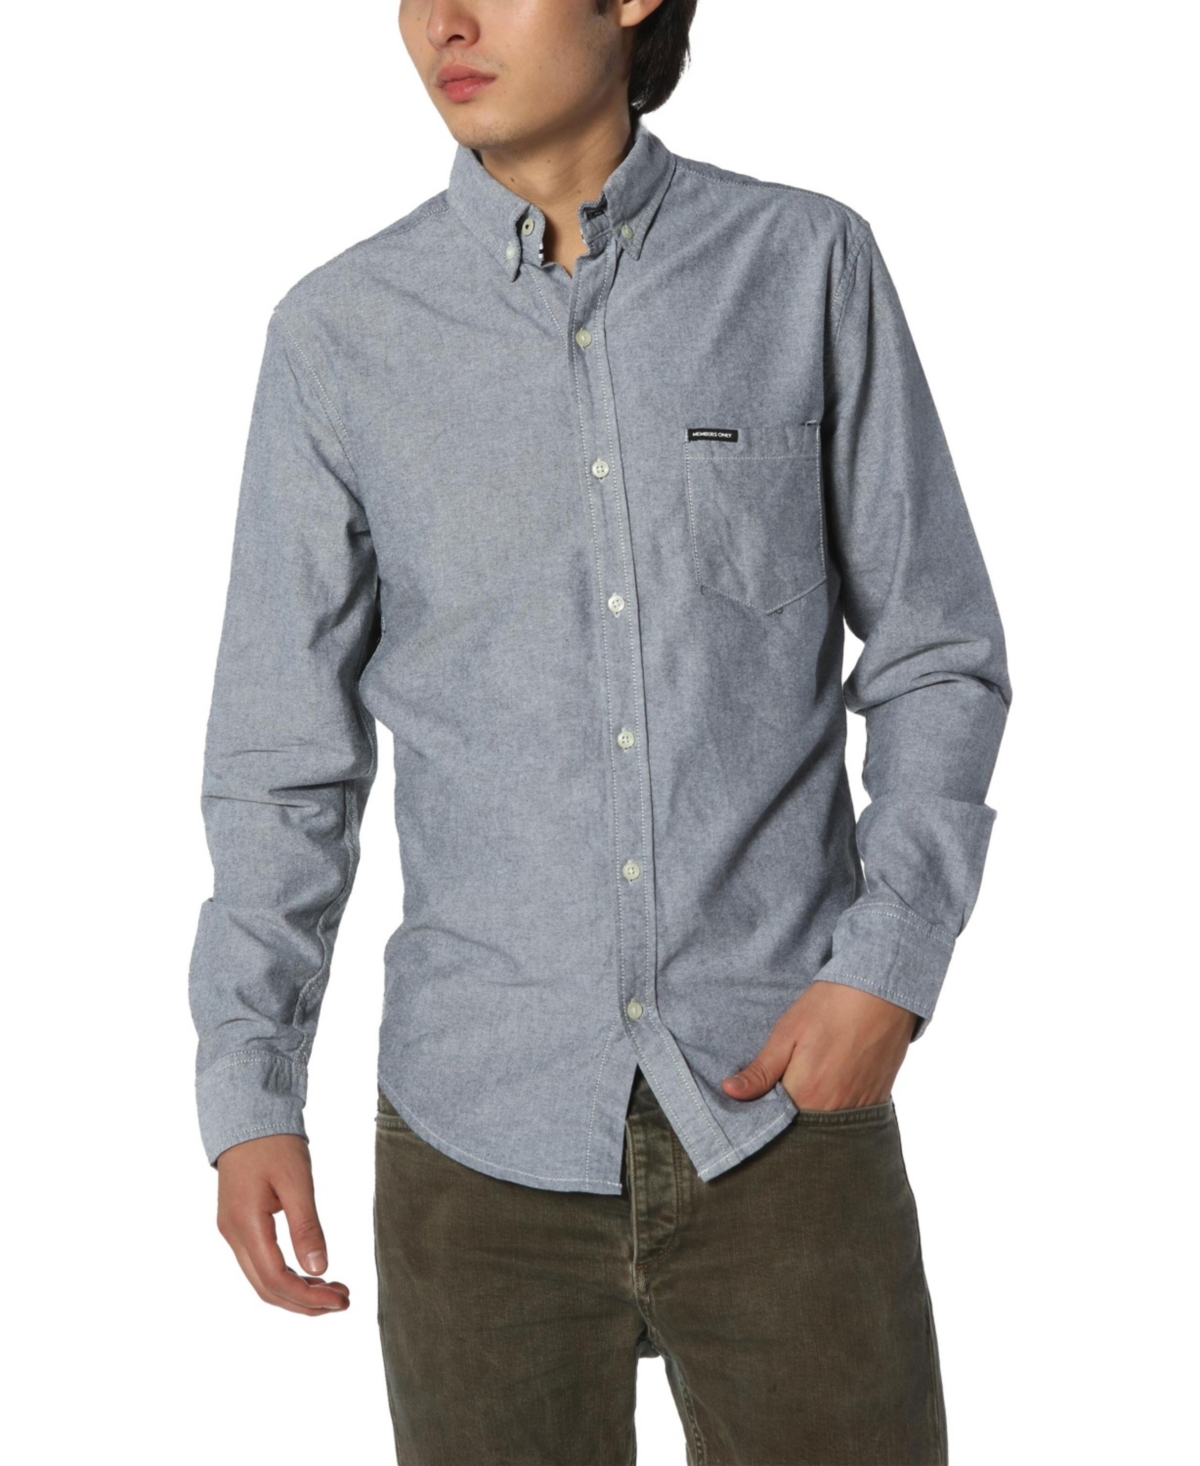 Men's Oxford Button-Up Dress Shirt - Charcoal